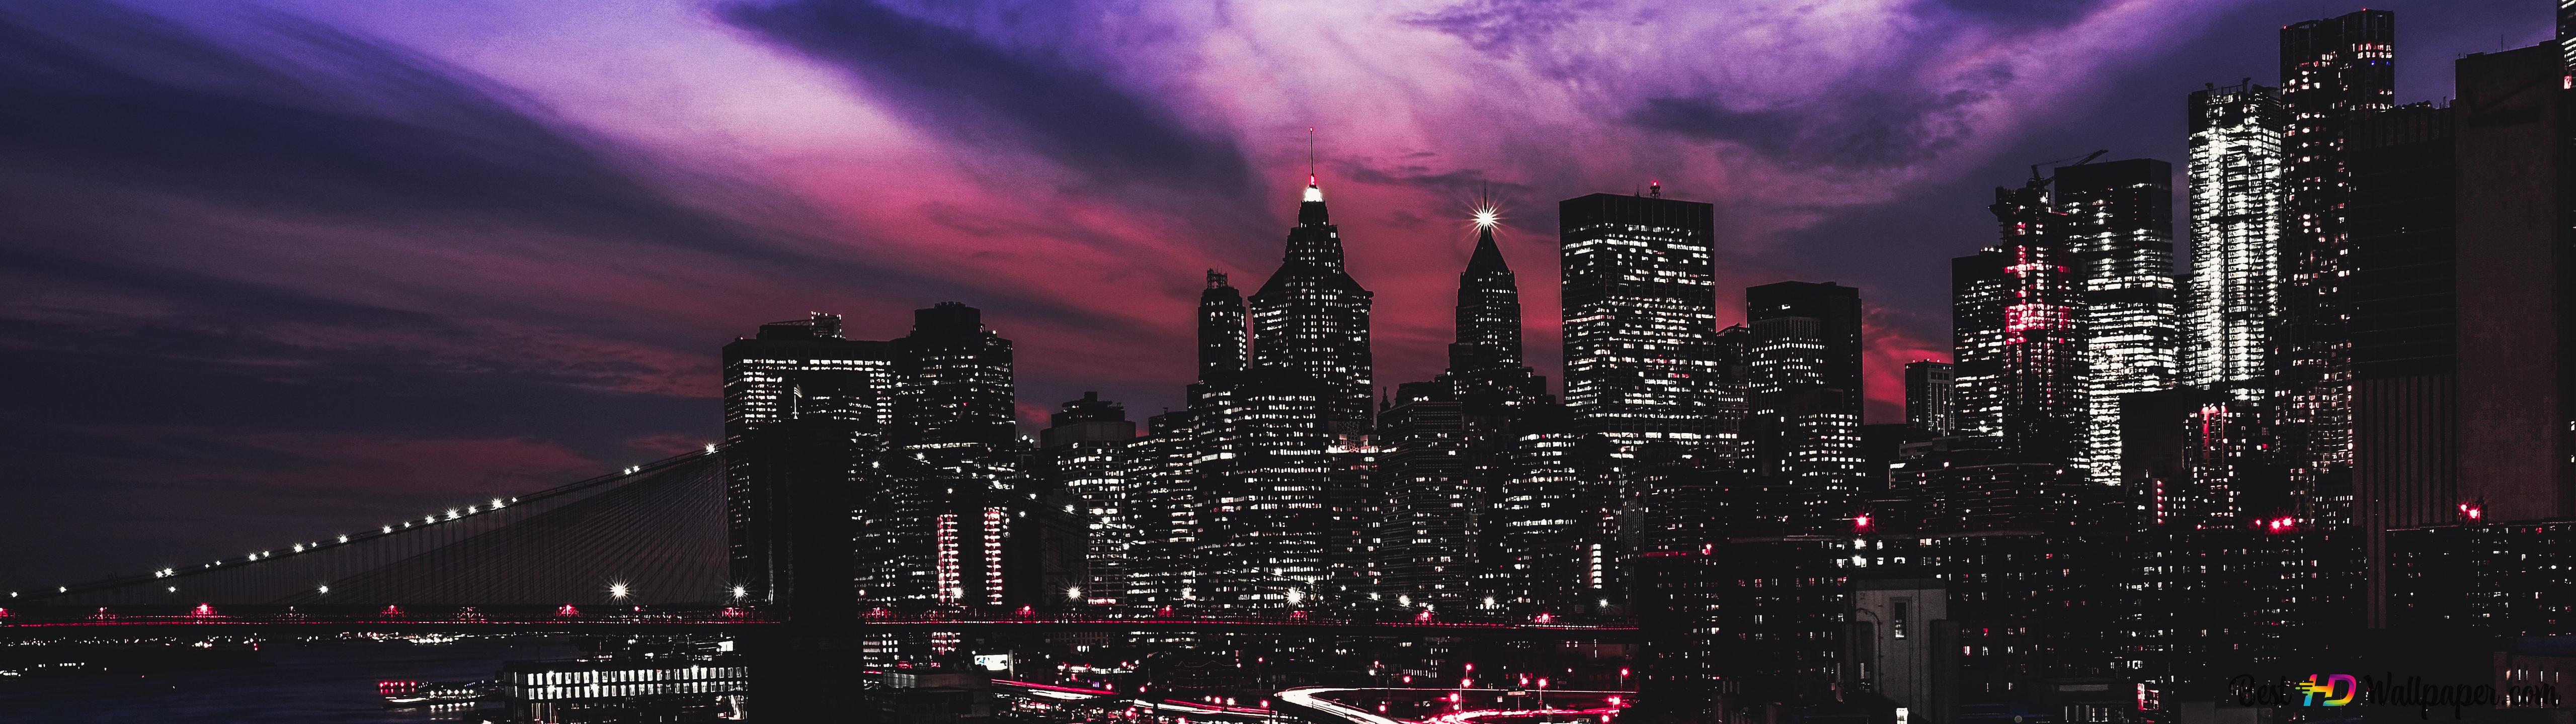 Manhattan City At Night 4K wallpaper download